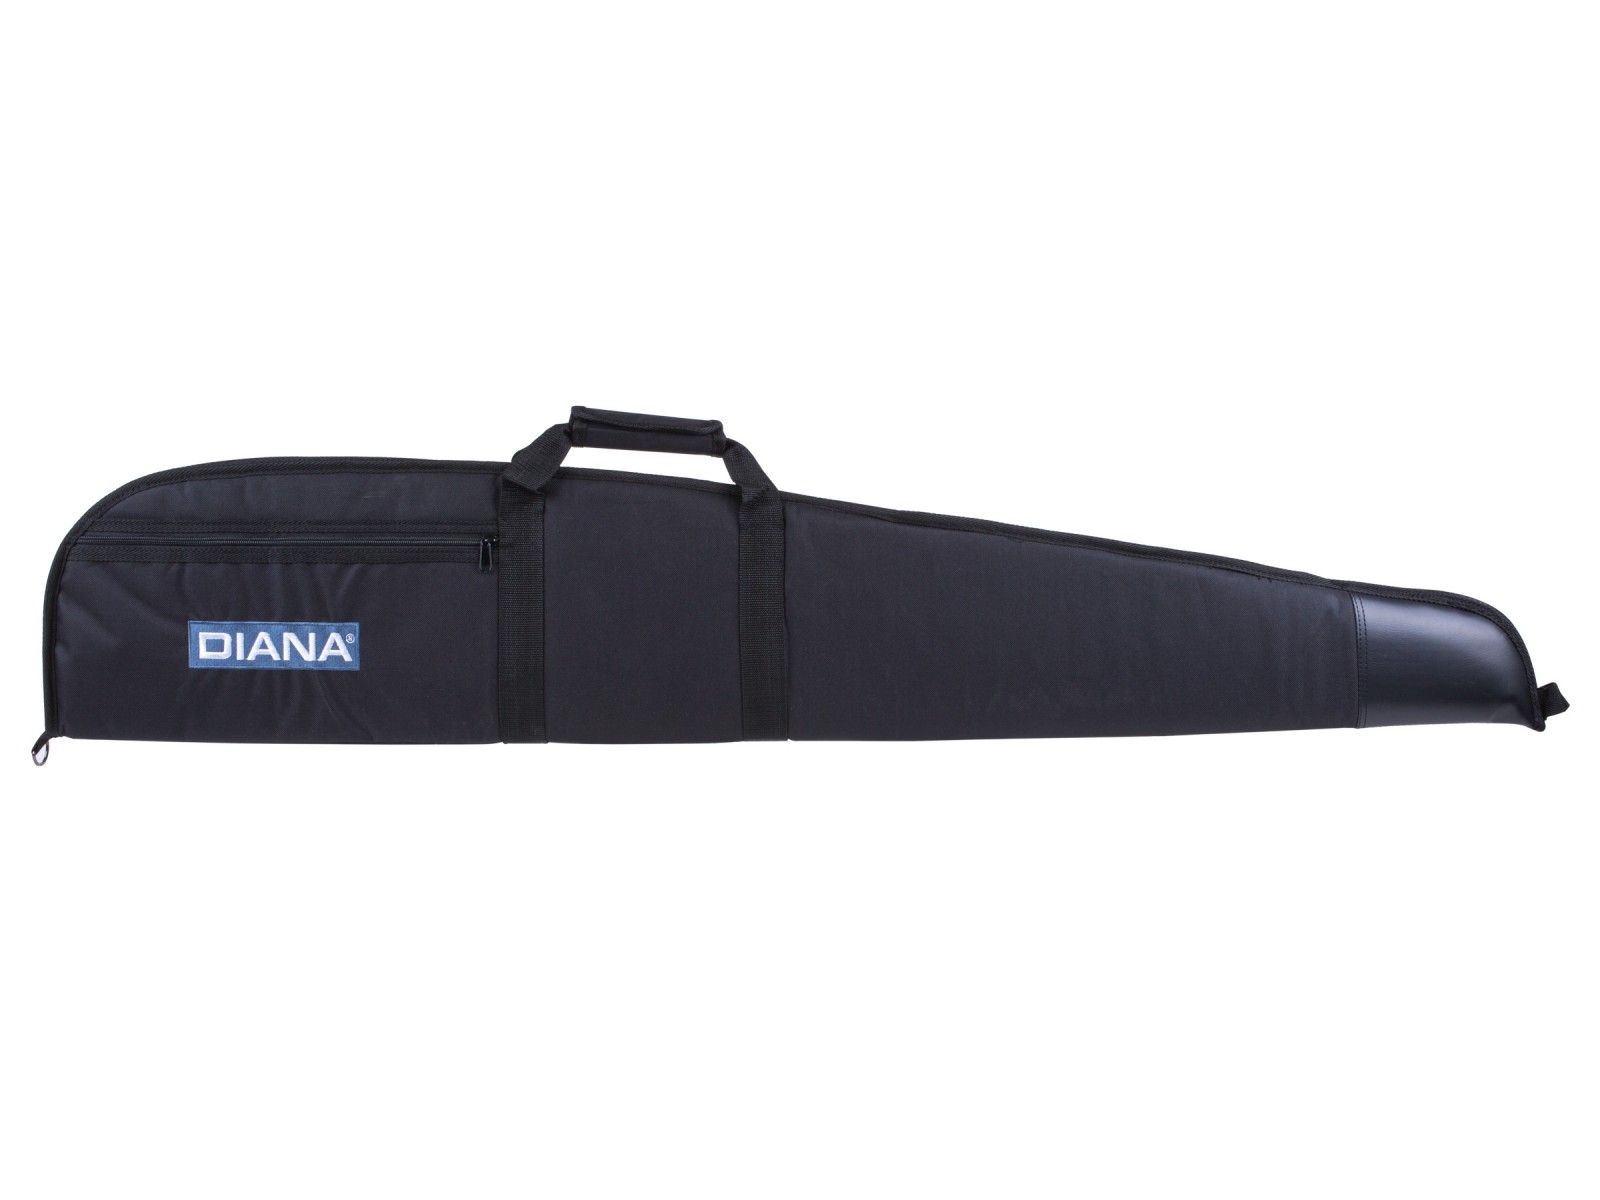 Diana Gun Bag Black Soft, 51 inch